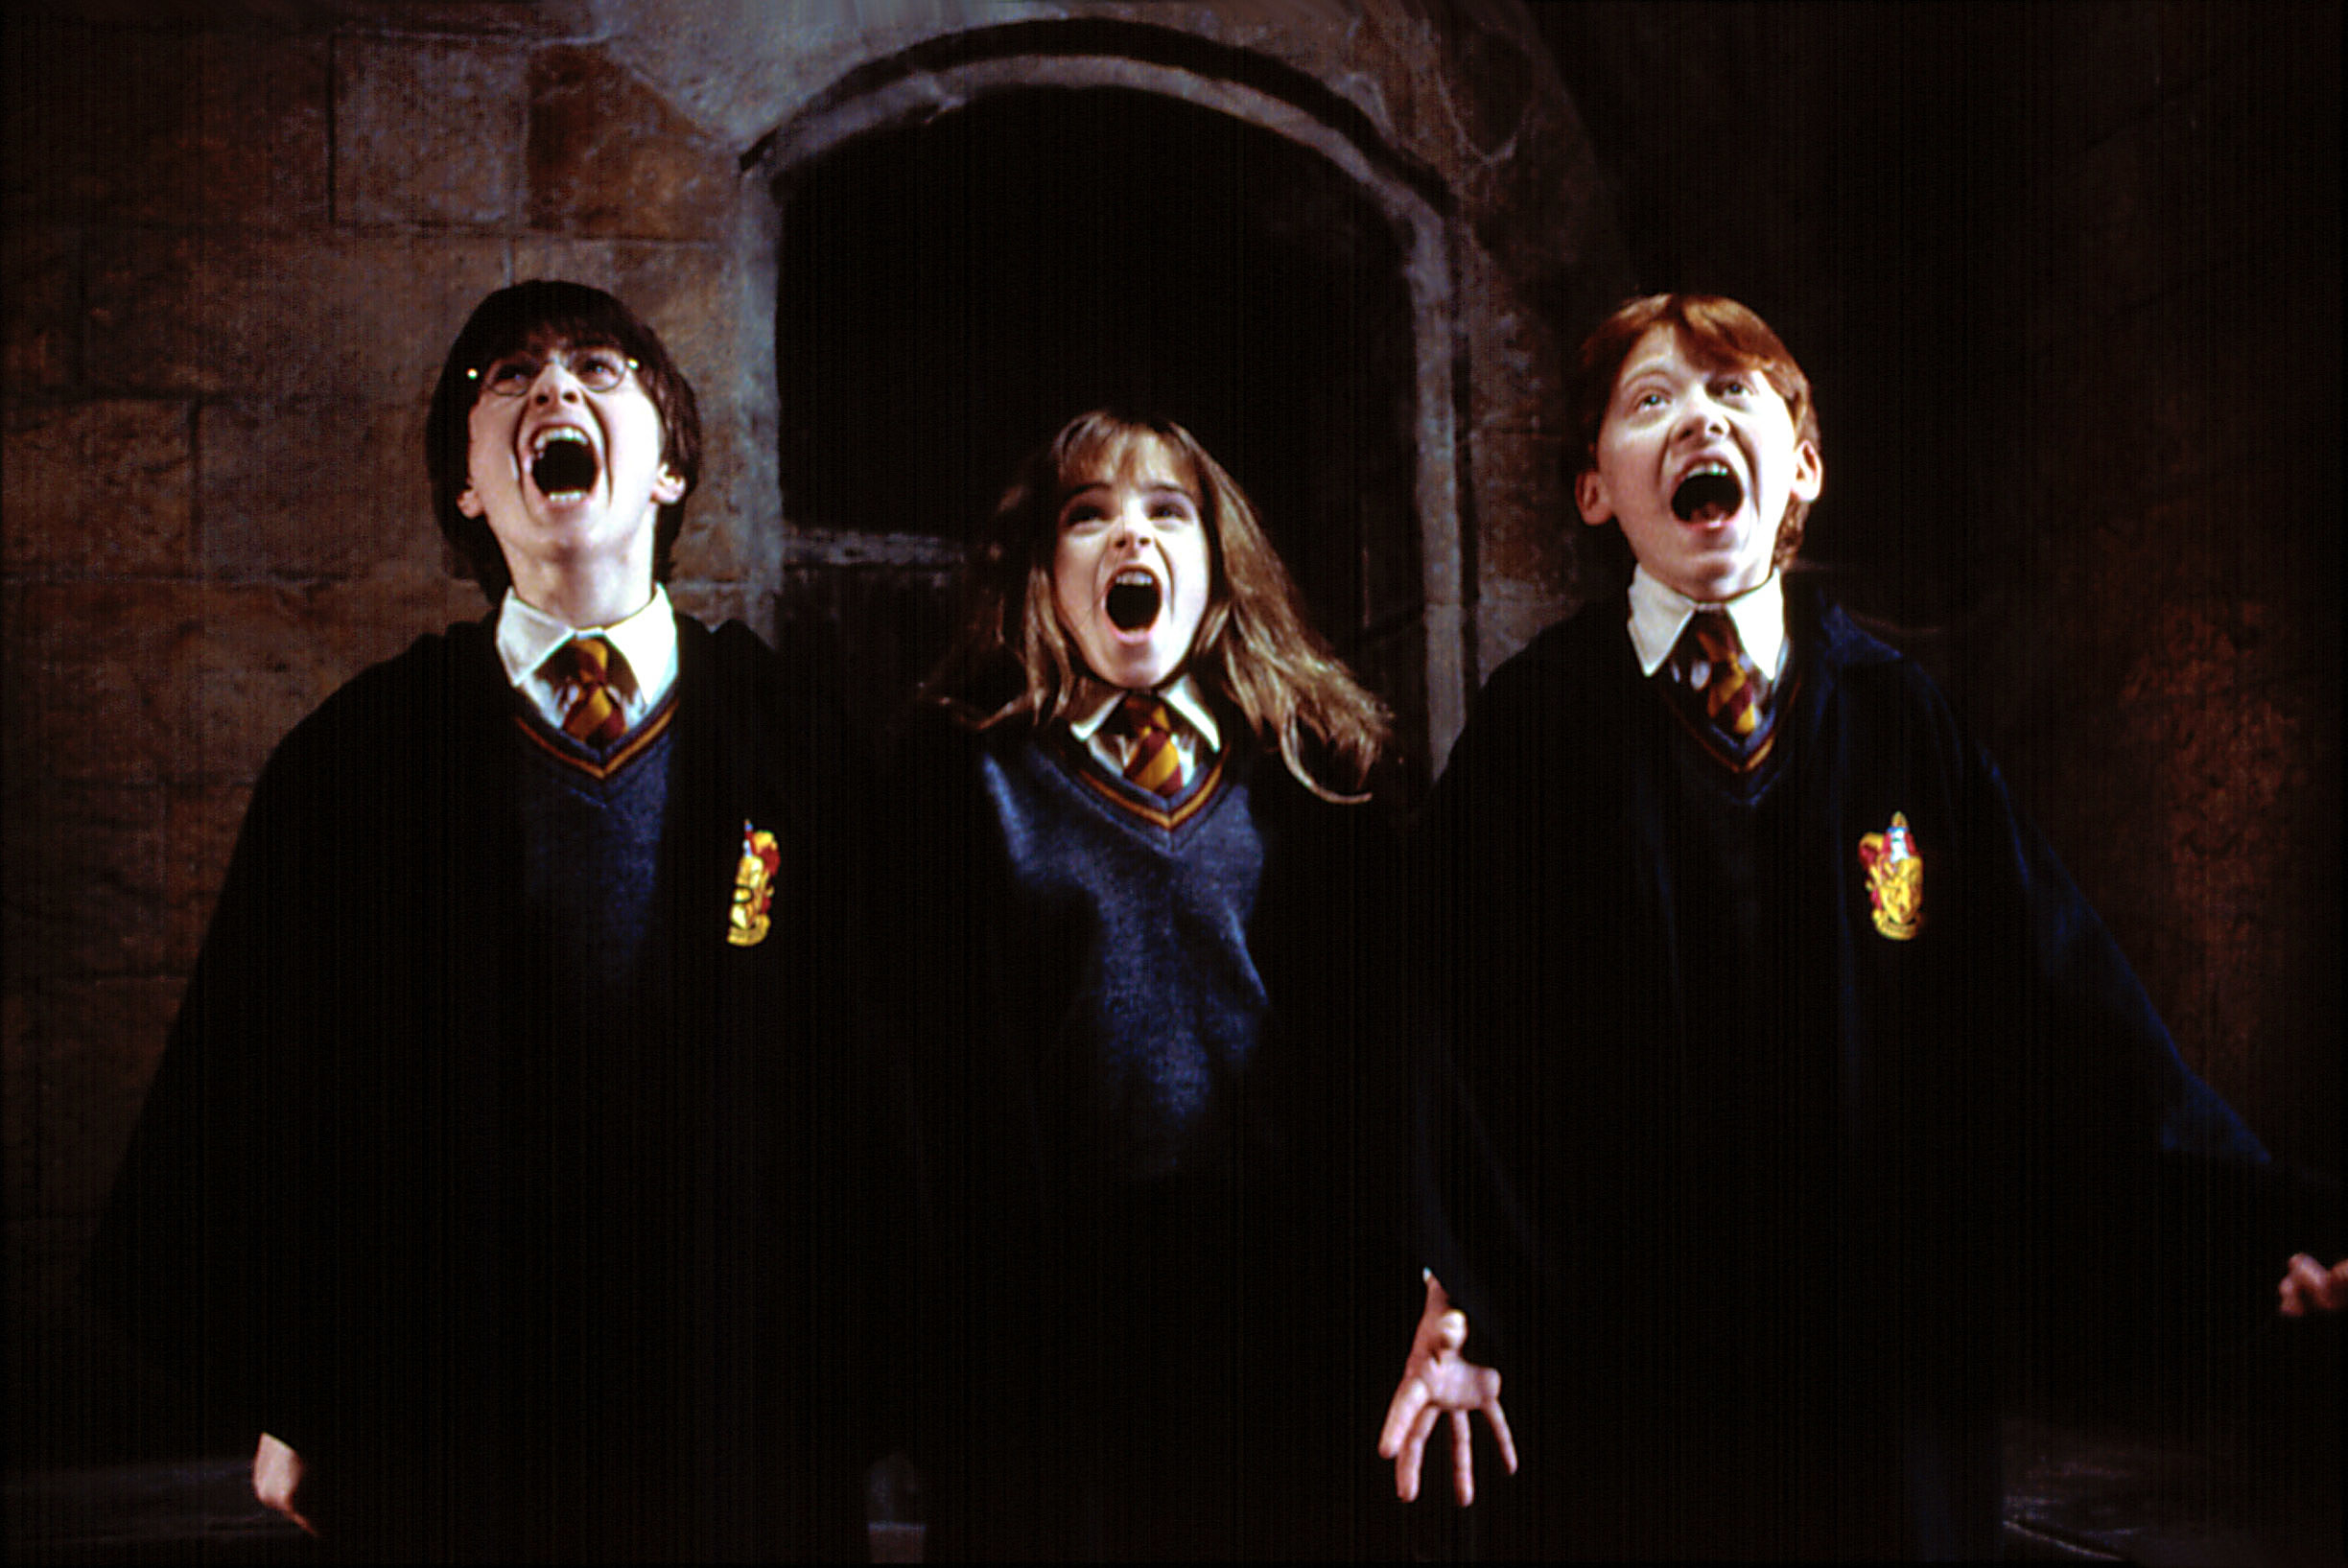 Daniel Radcliffe, Emma Watson, and Rupert Grint all scream in Hogwarts robes